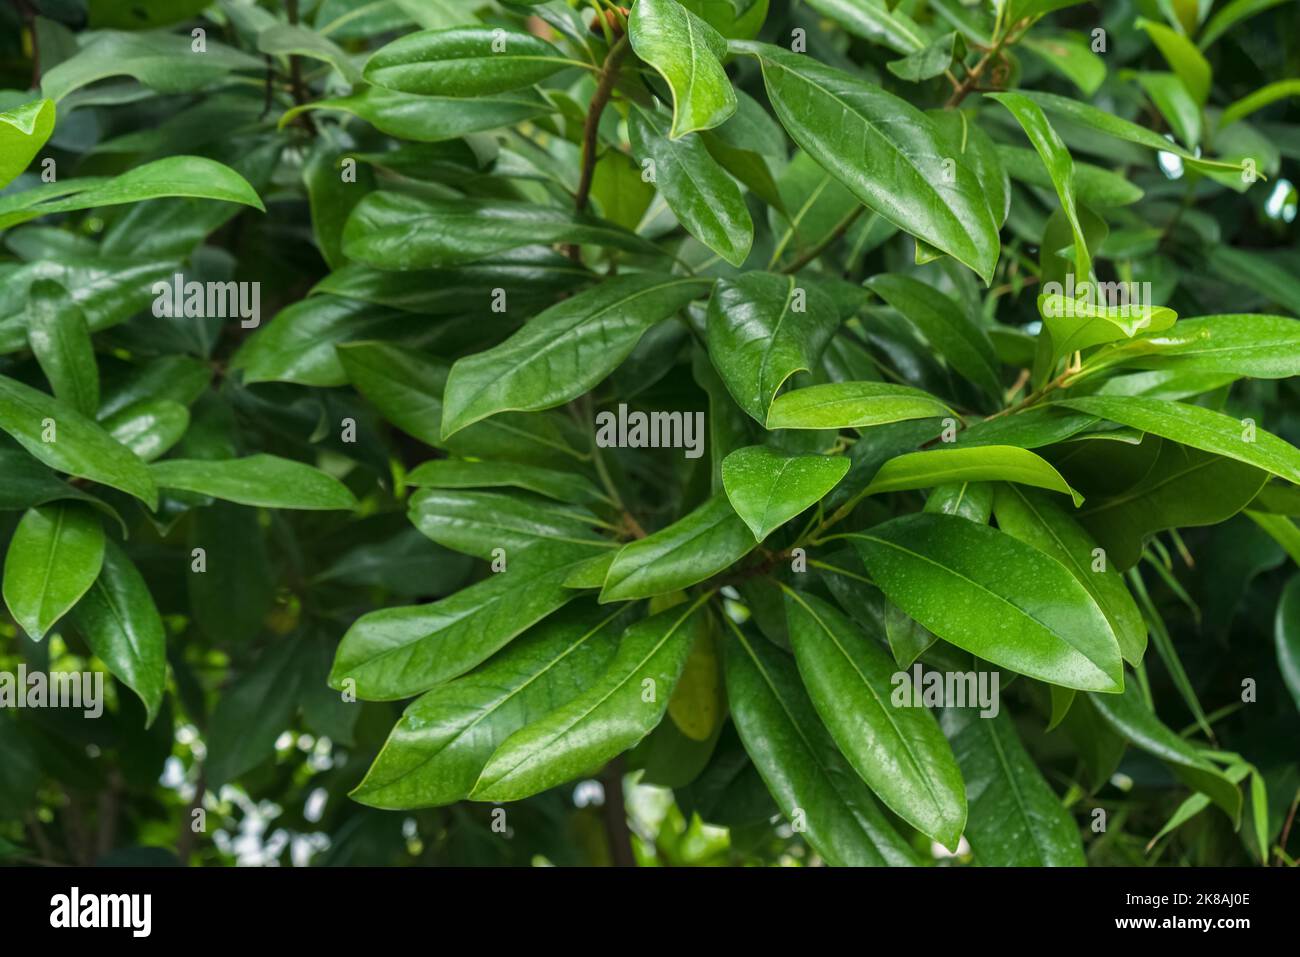 bright green leaves of ardisia revoluta kunth at close range view Stock Photo